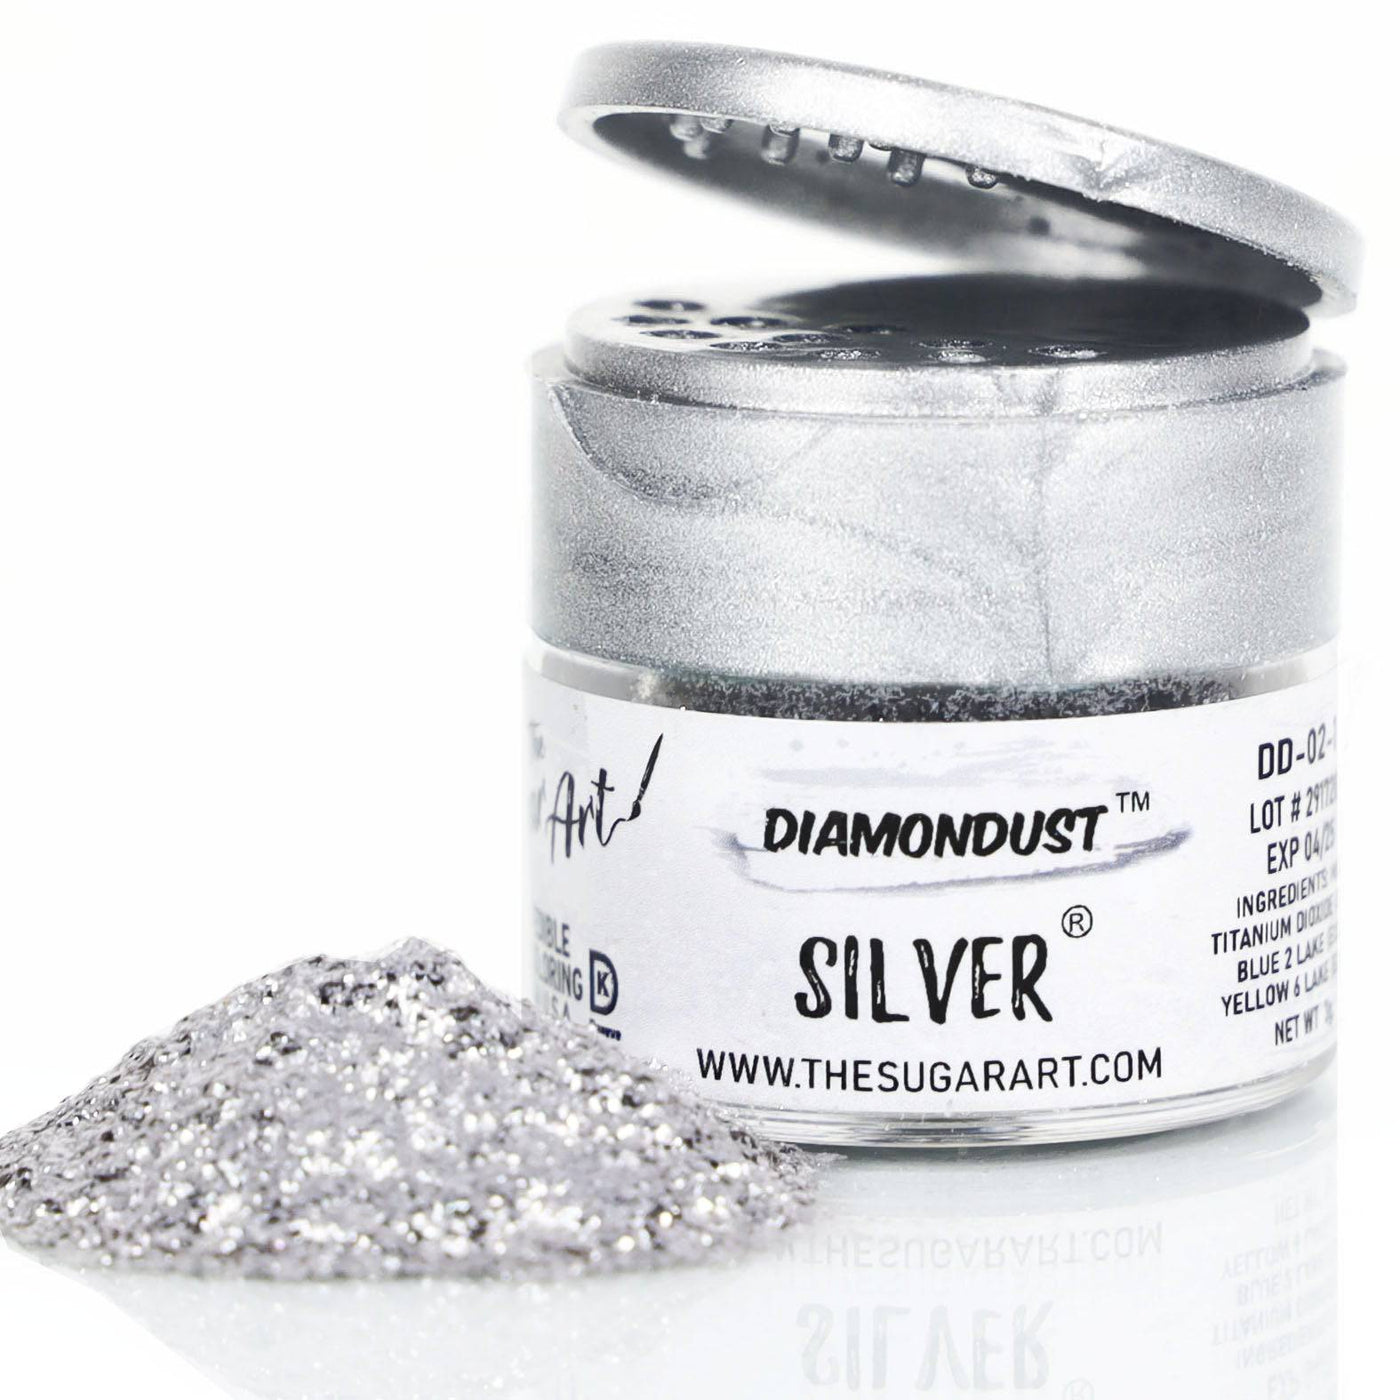 Bulk 200g - Crafting Glitter Flakes - Silver - Roberts Edible Craft